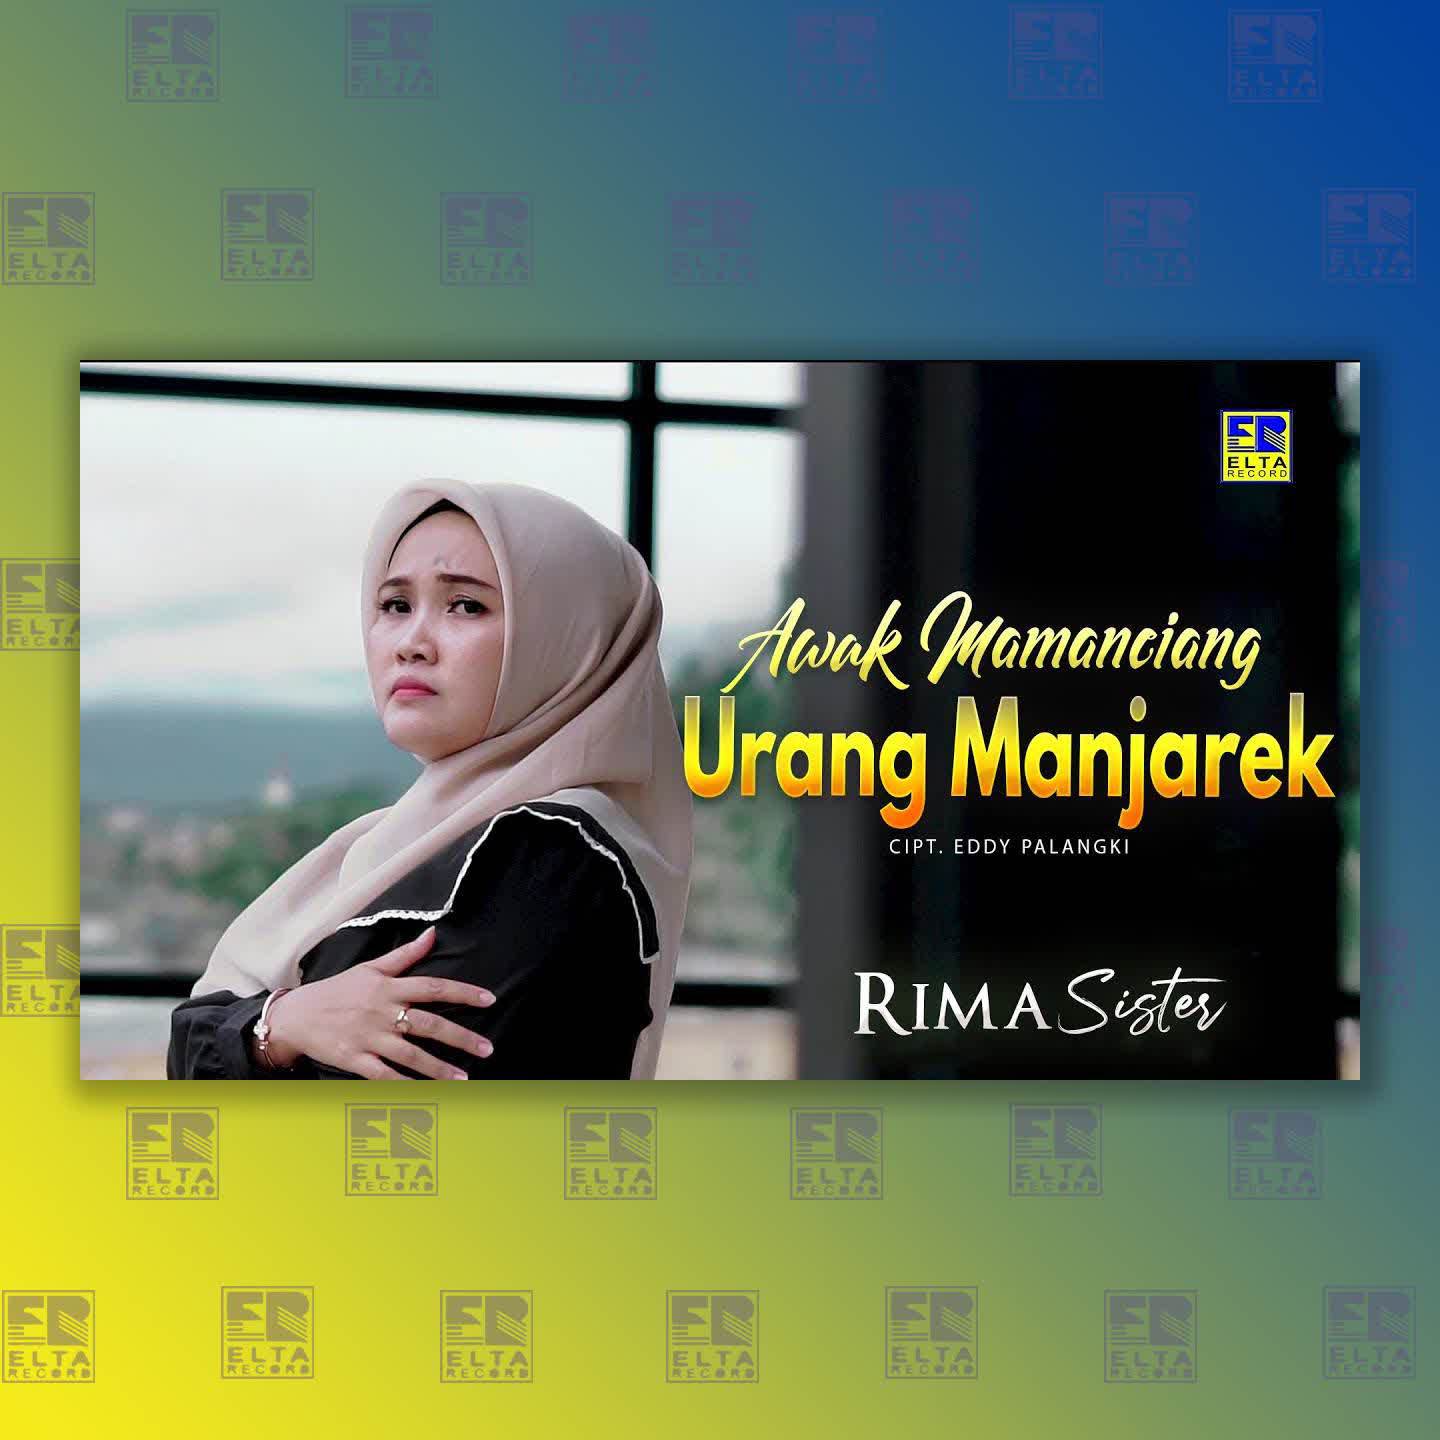 Rima Sister - Awak Mamanciang Urang Manjarek